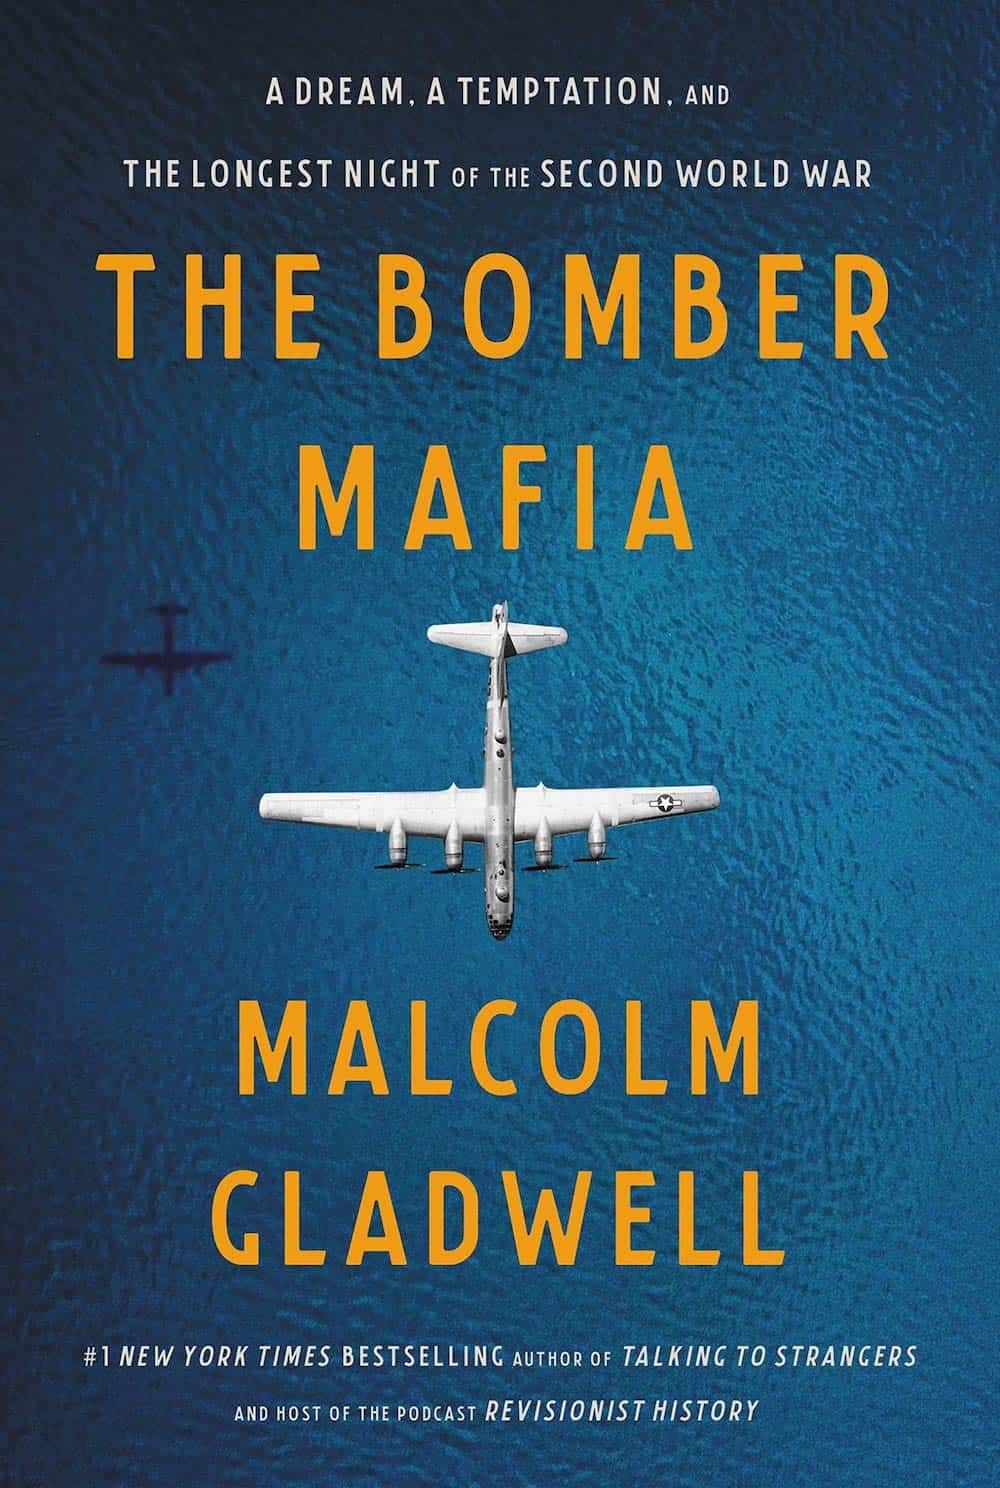 The cover of The Bomber Mafia